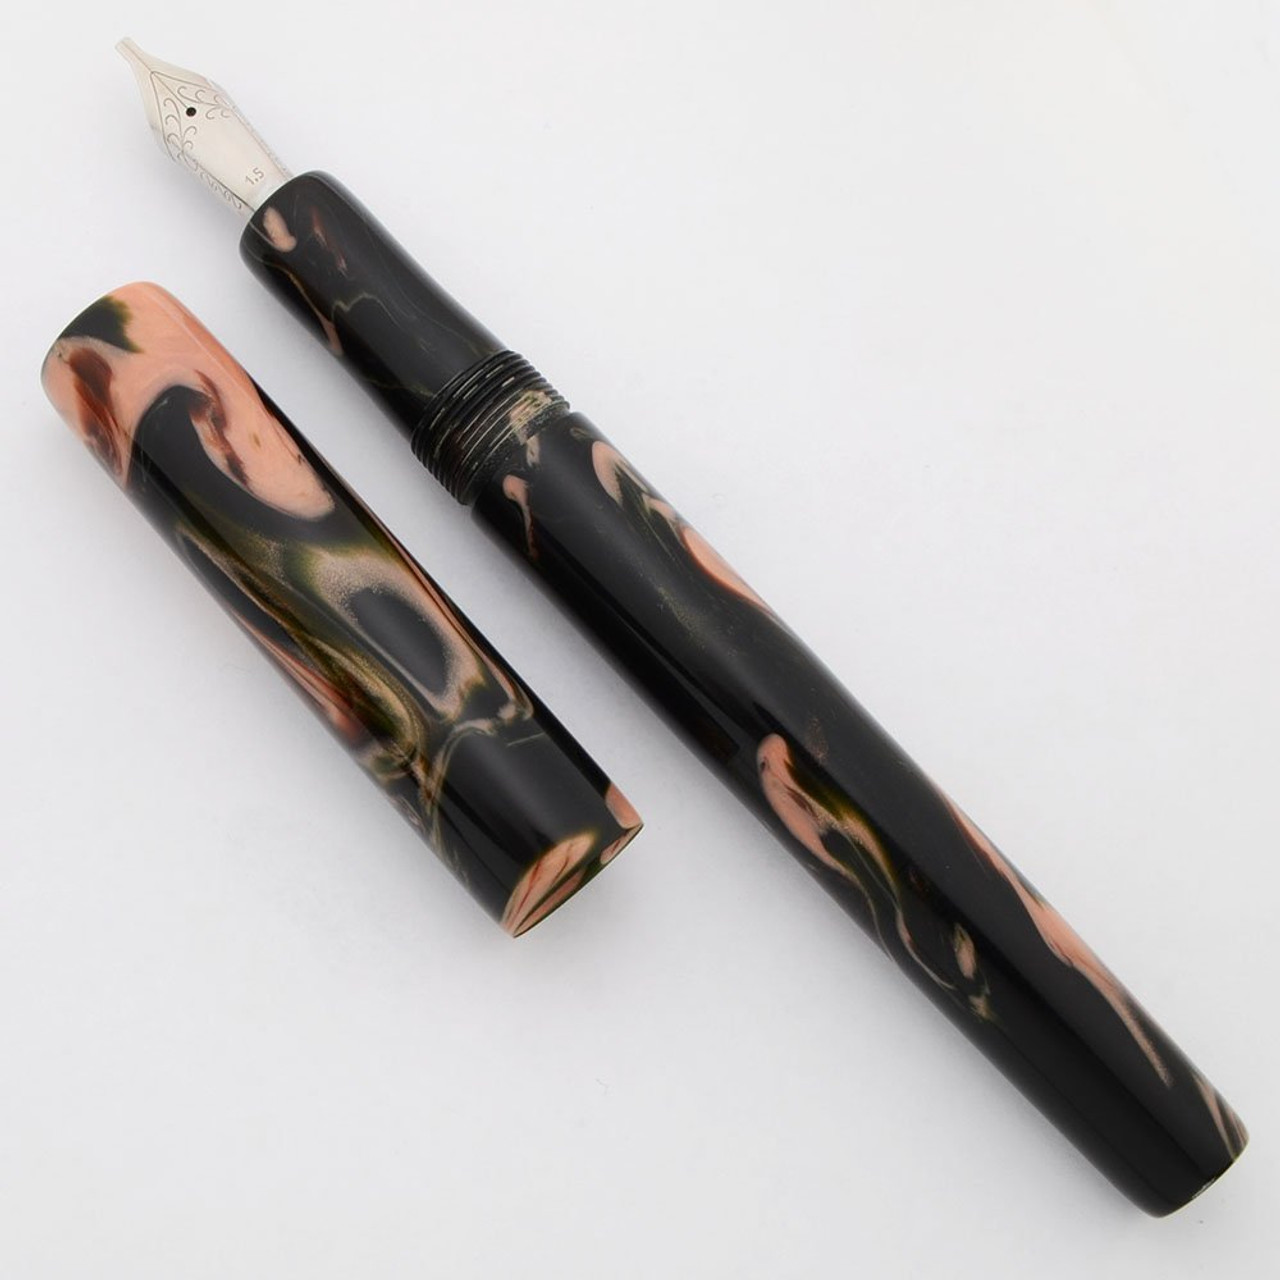 PSPW Prototype Fountain Pen - "Midnight Camoflauge" Alumilite w PSP Emblem, Oversize, No Clip, #6 JoWo Nibs (New)